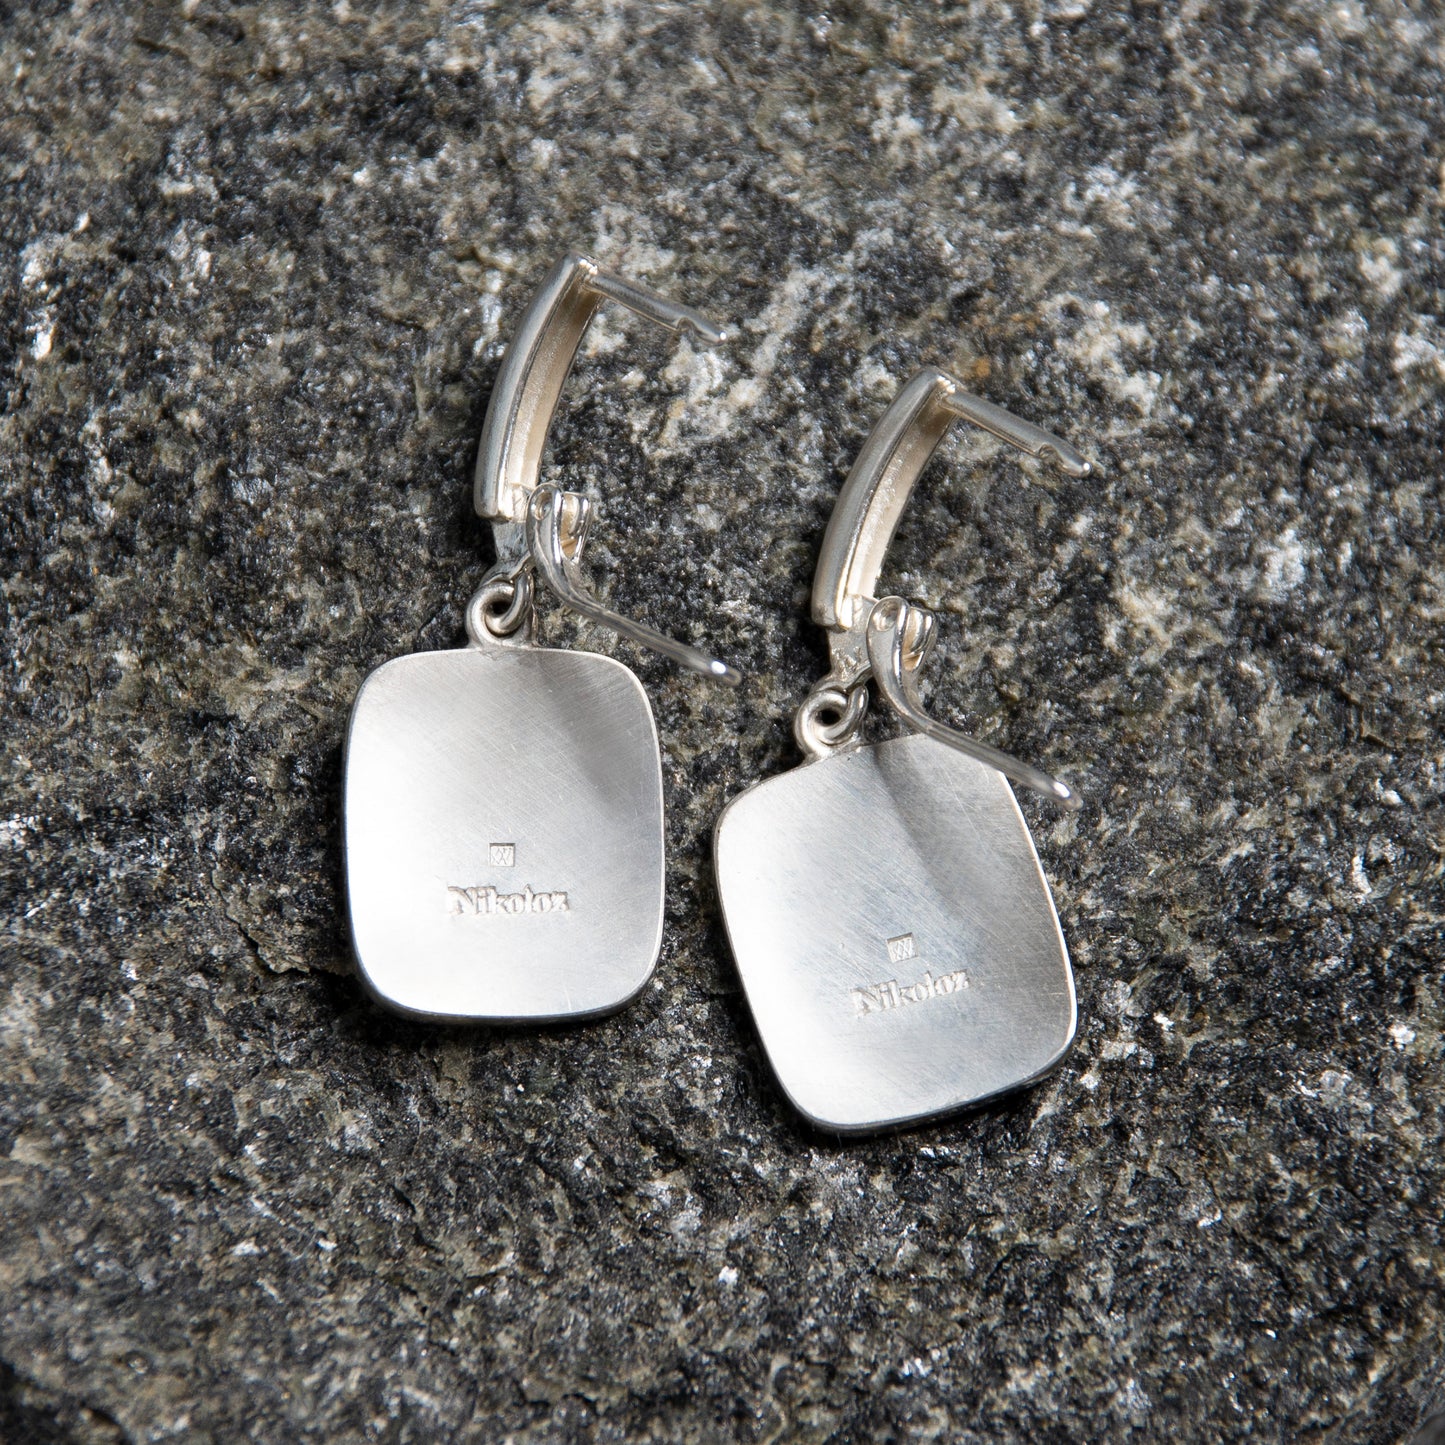 Cloisonné Enamel, Sterling Silver Earrings "Rock Cave"